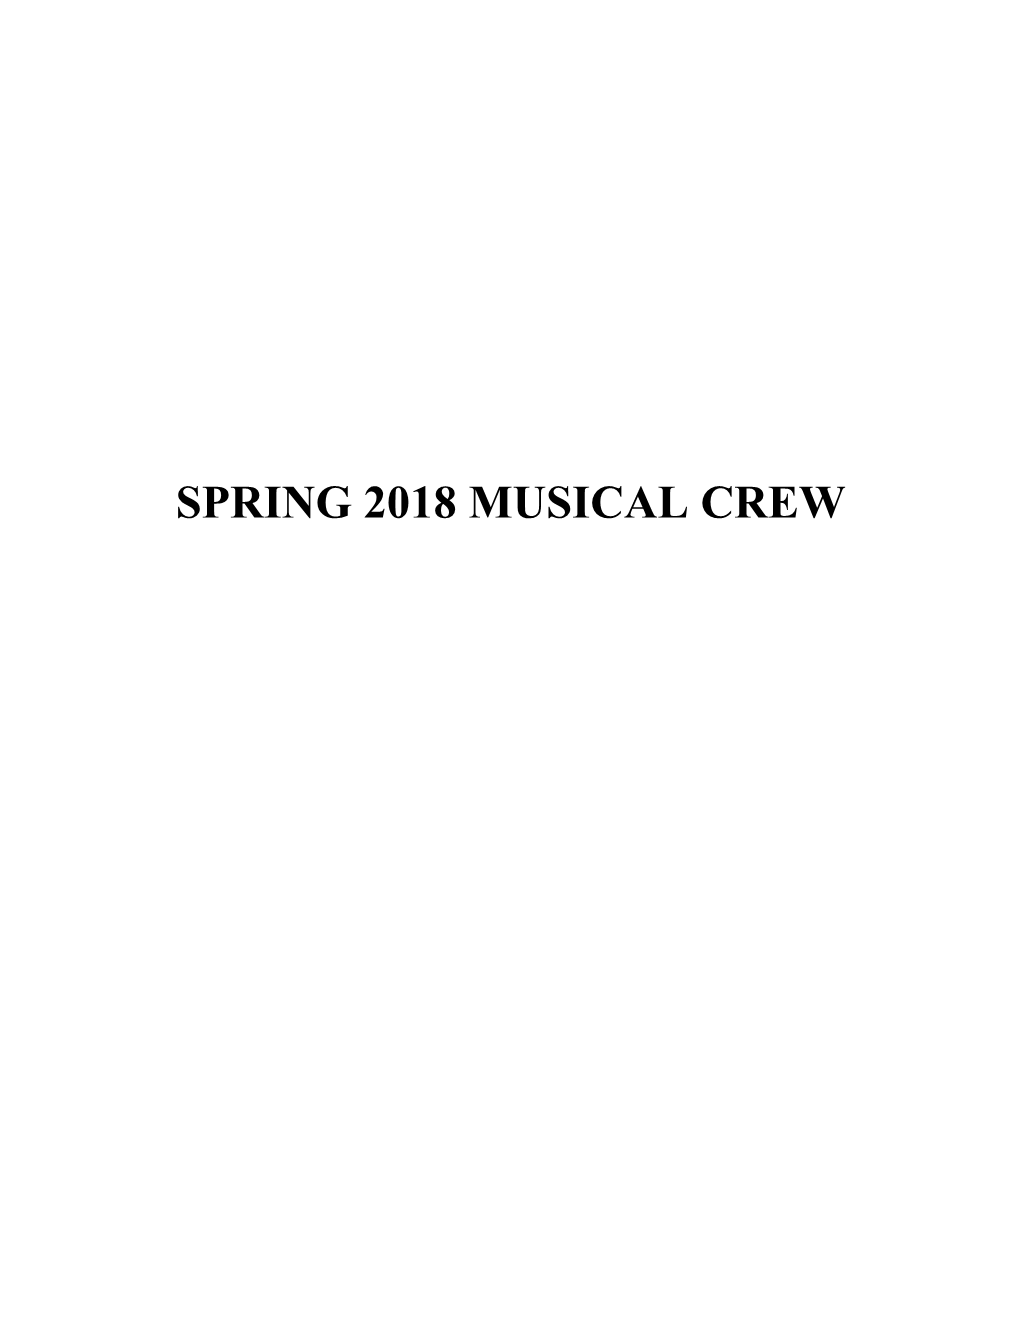 Spring 2018 Musical Crew